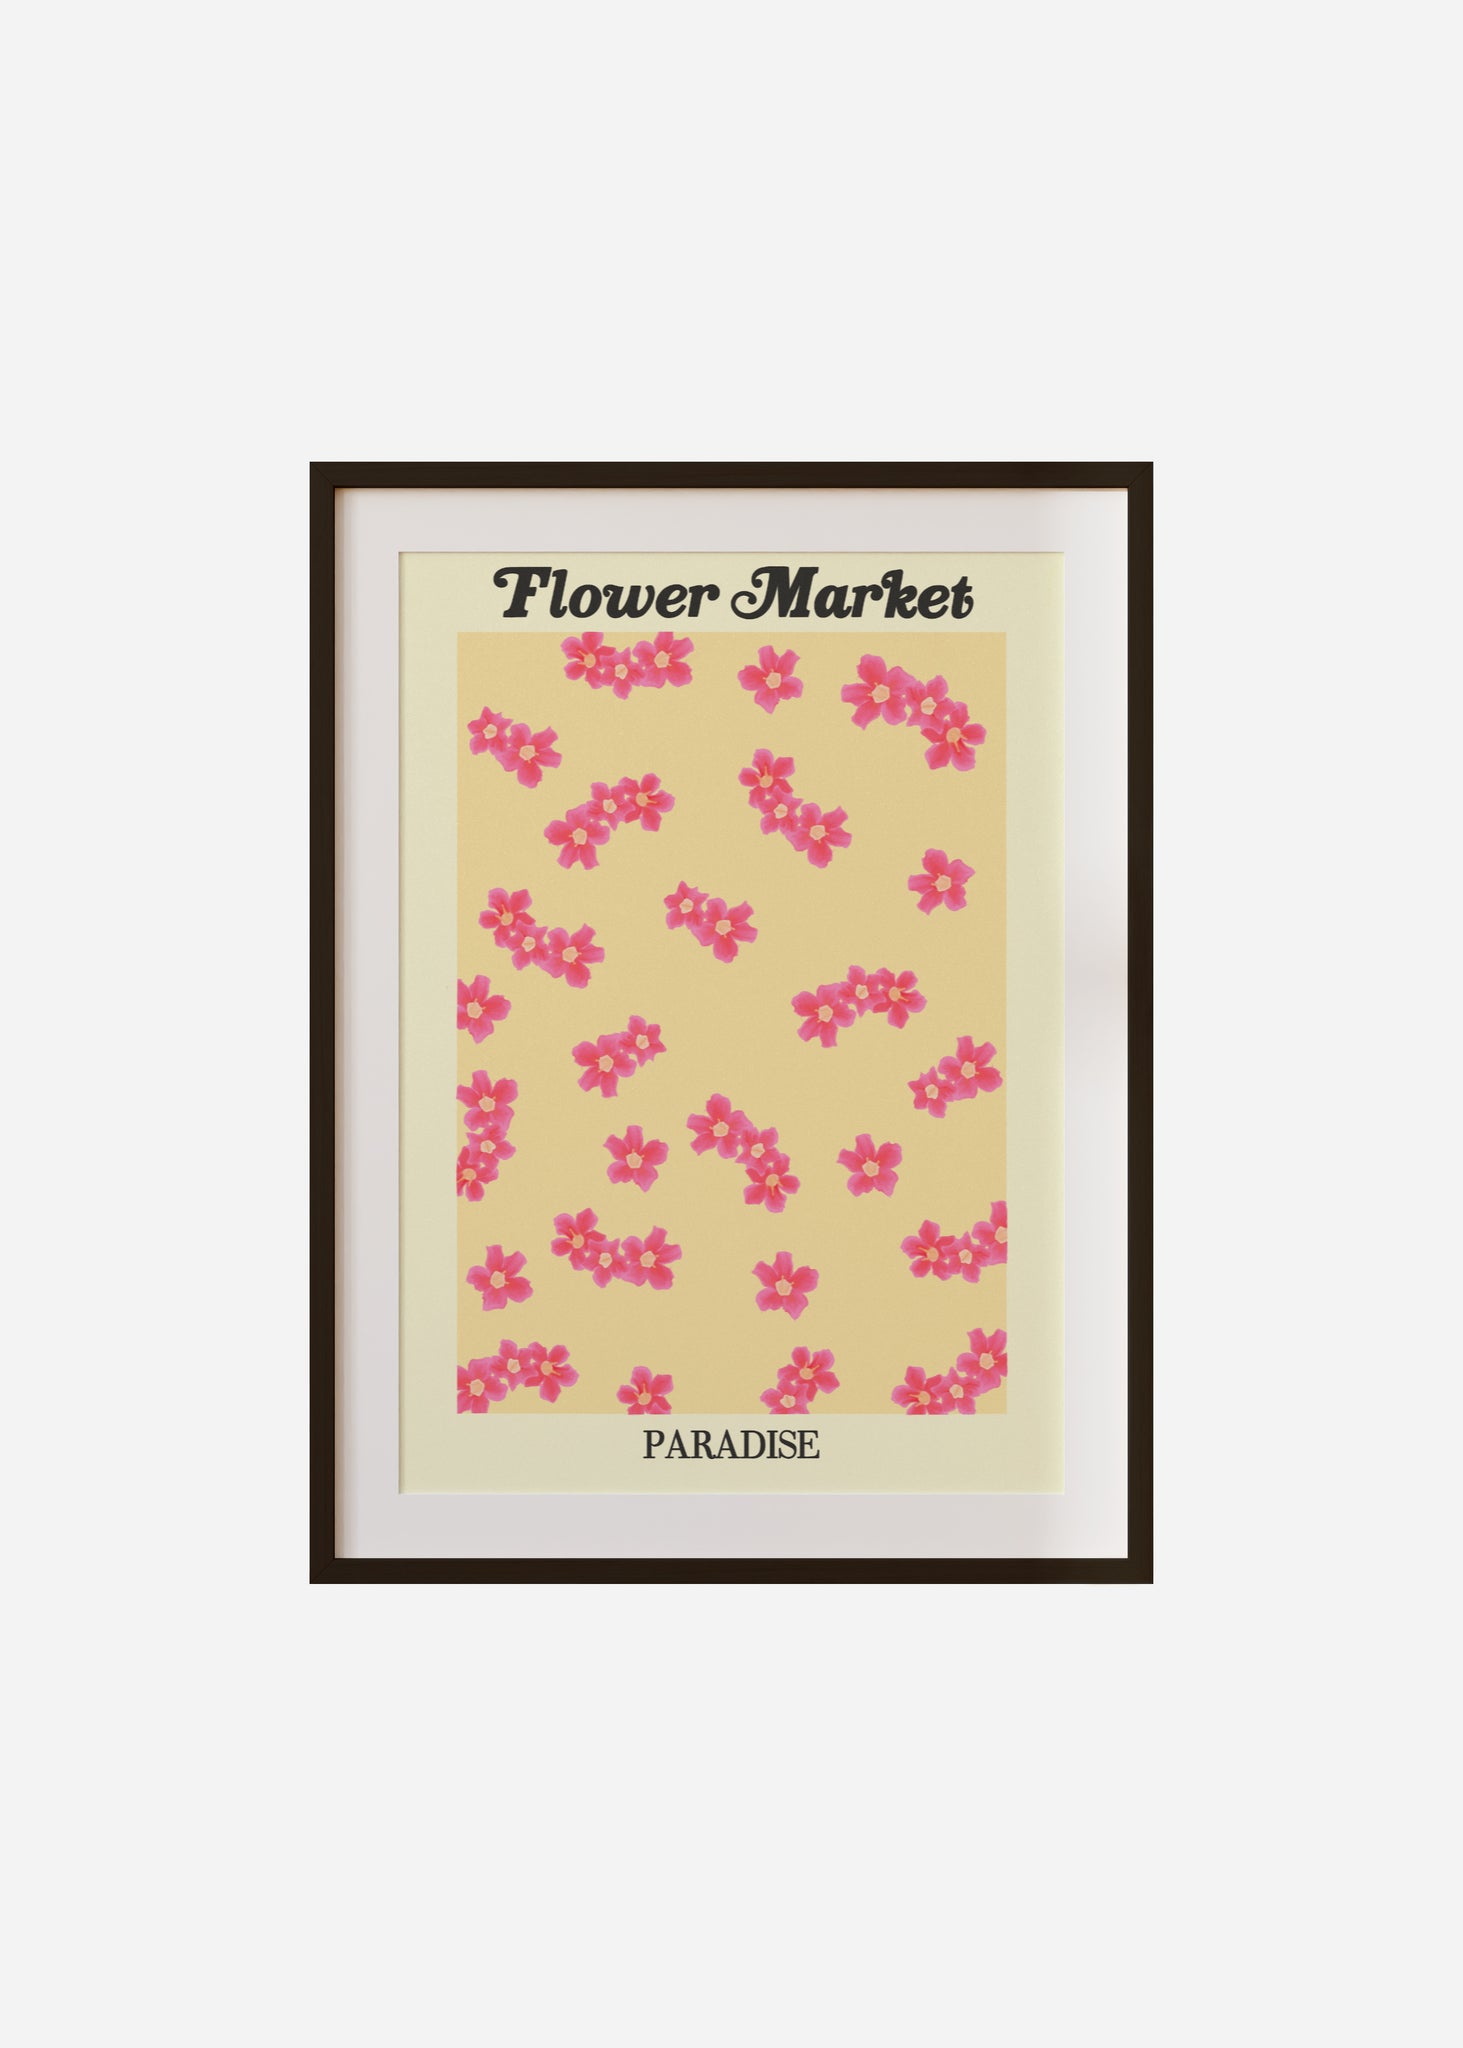 flower market / paradise Framed & Mounted Print